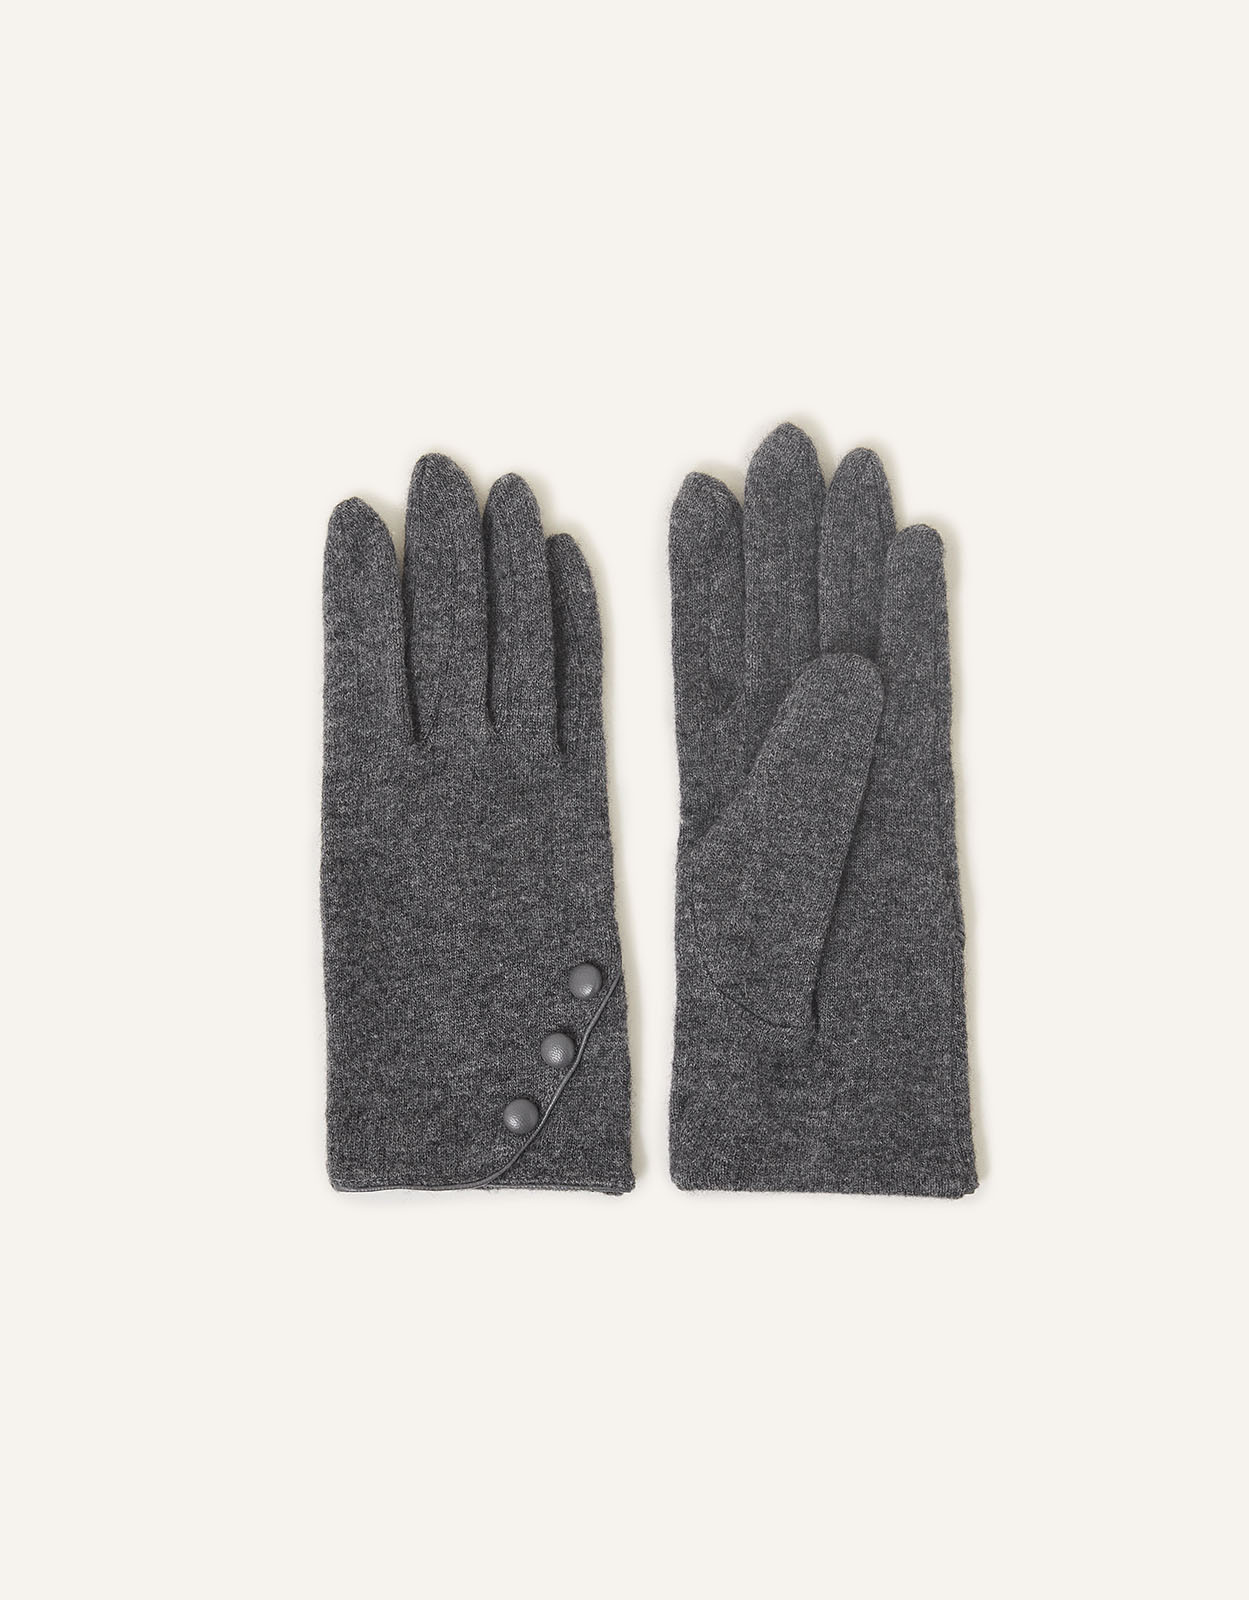 Accessorize Women's Button Gloves in Wool Blend Grey, Size: M / L